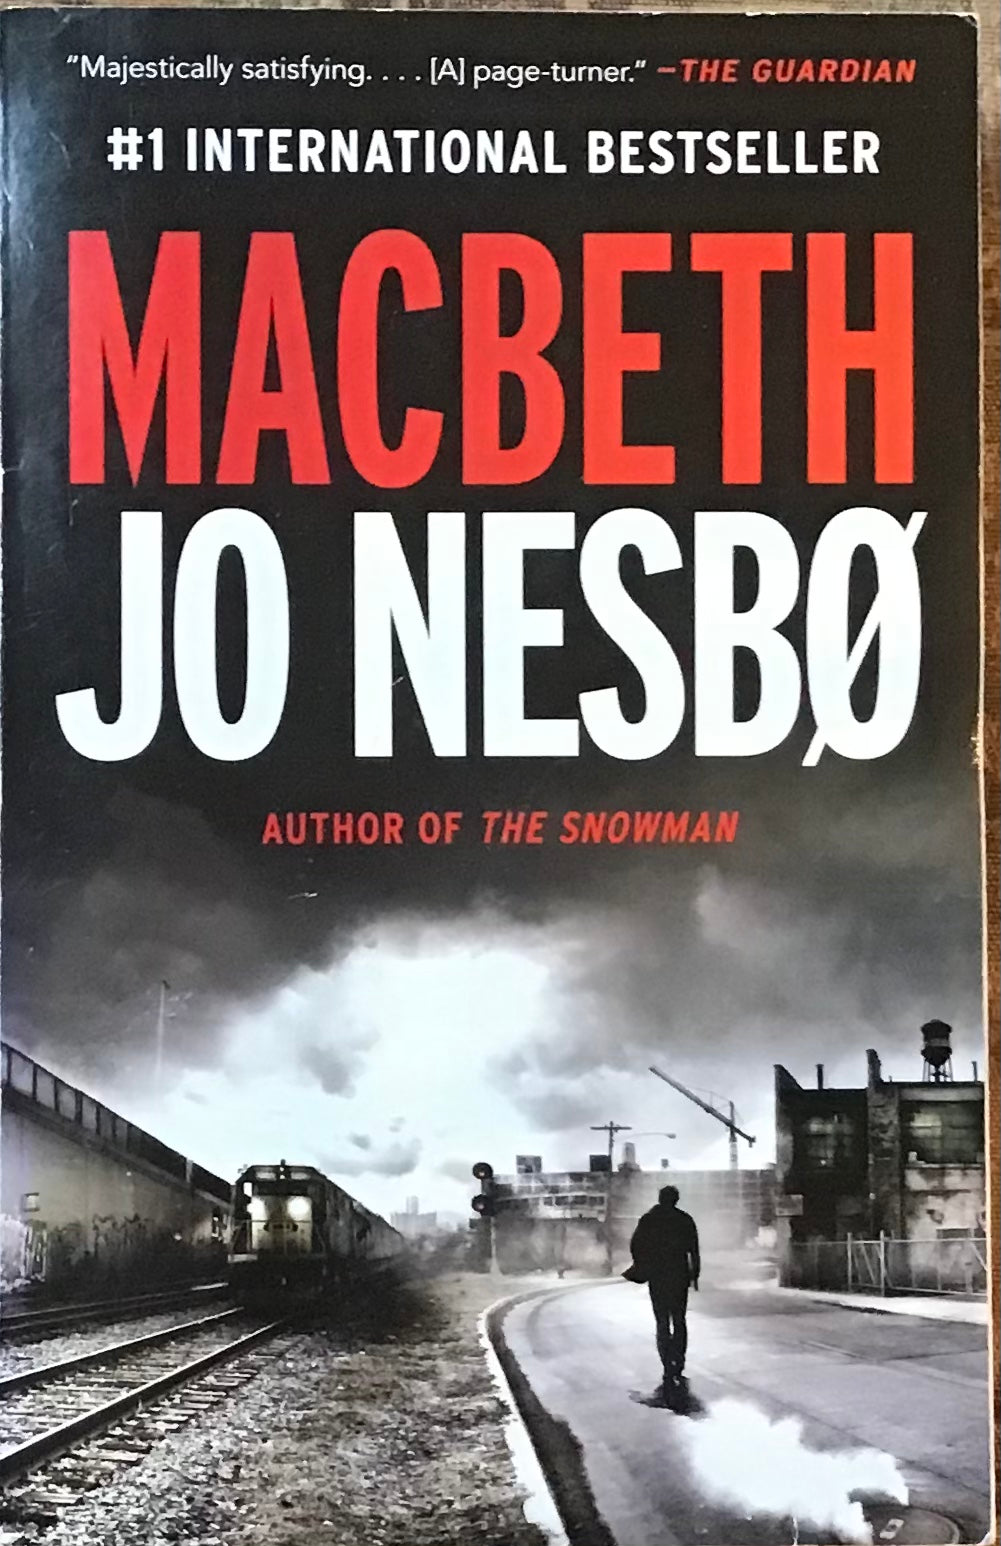 Macbeth, Jo Nesbo